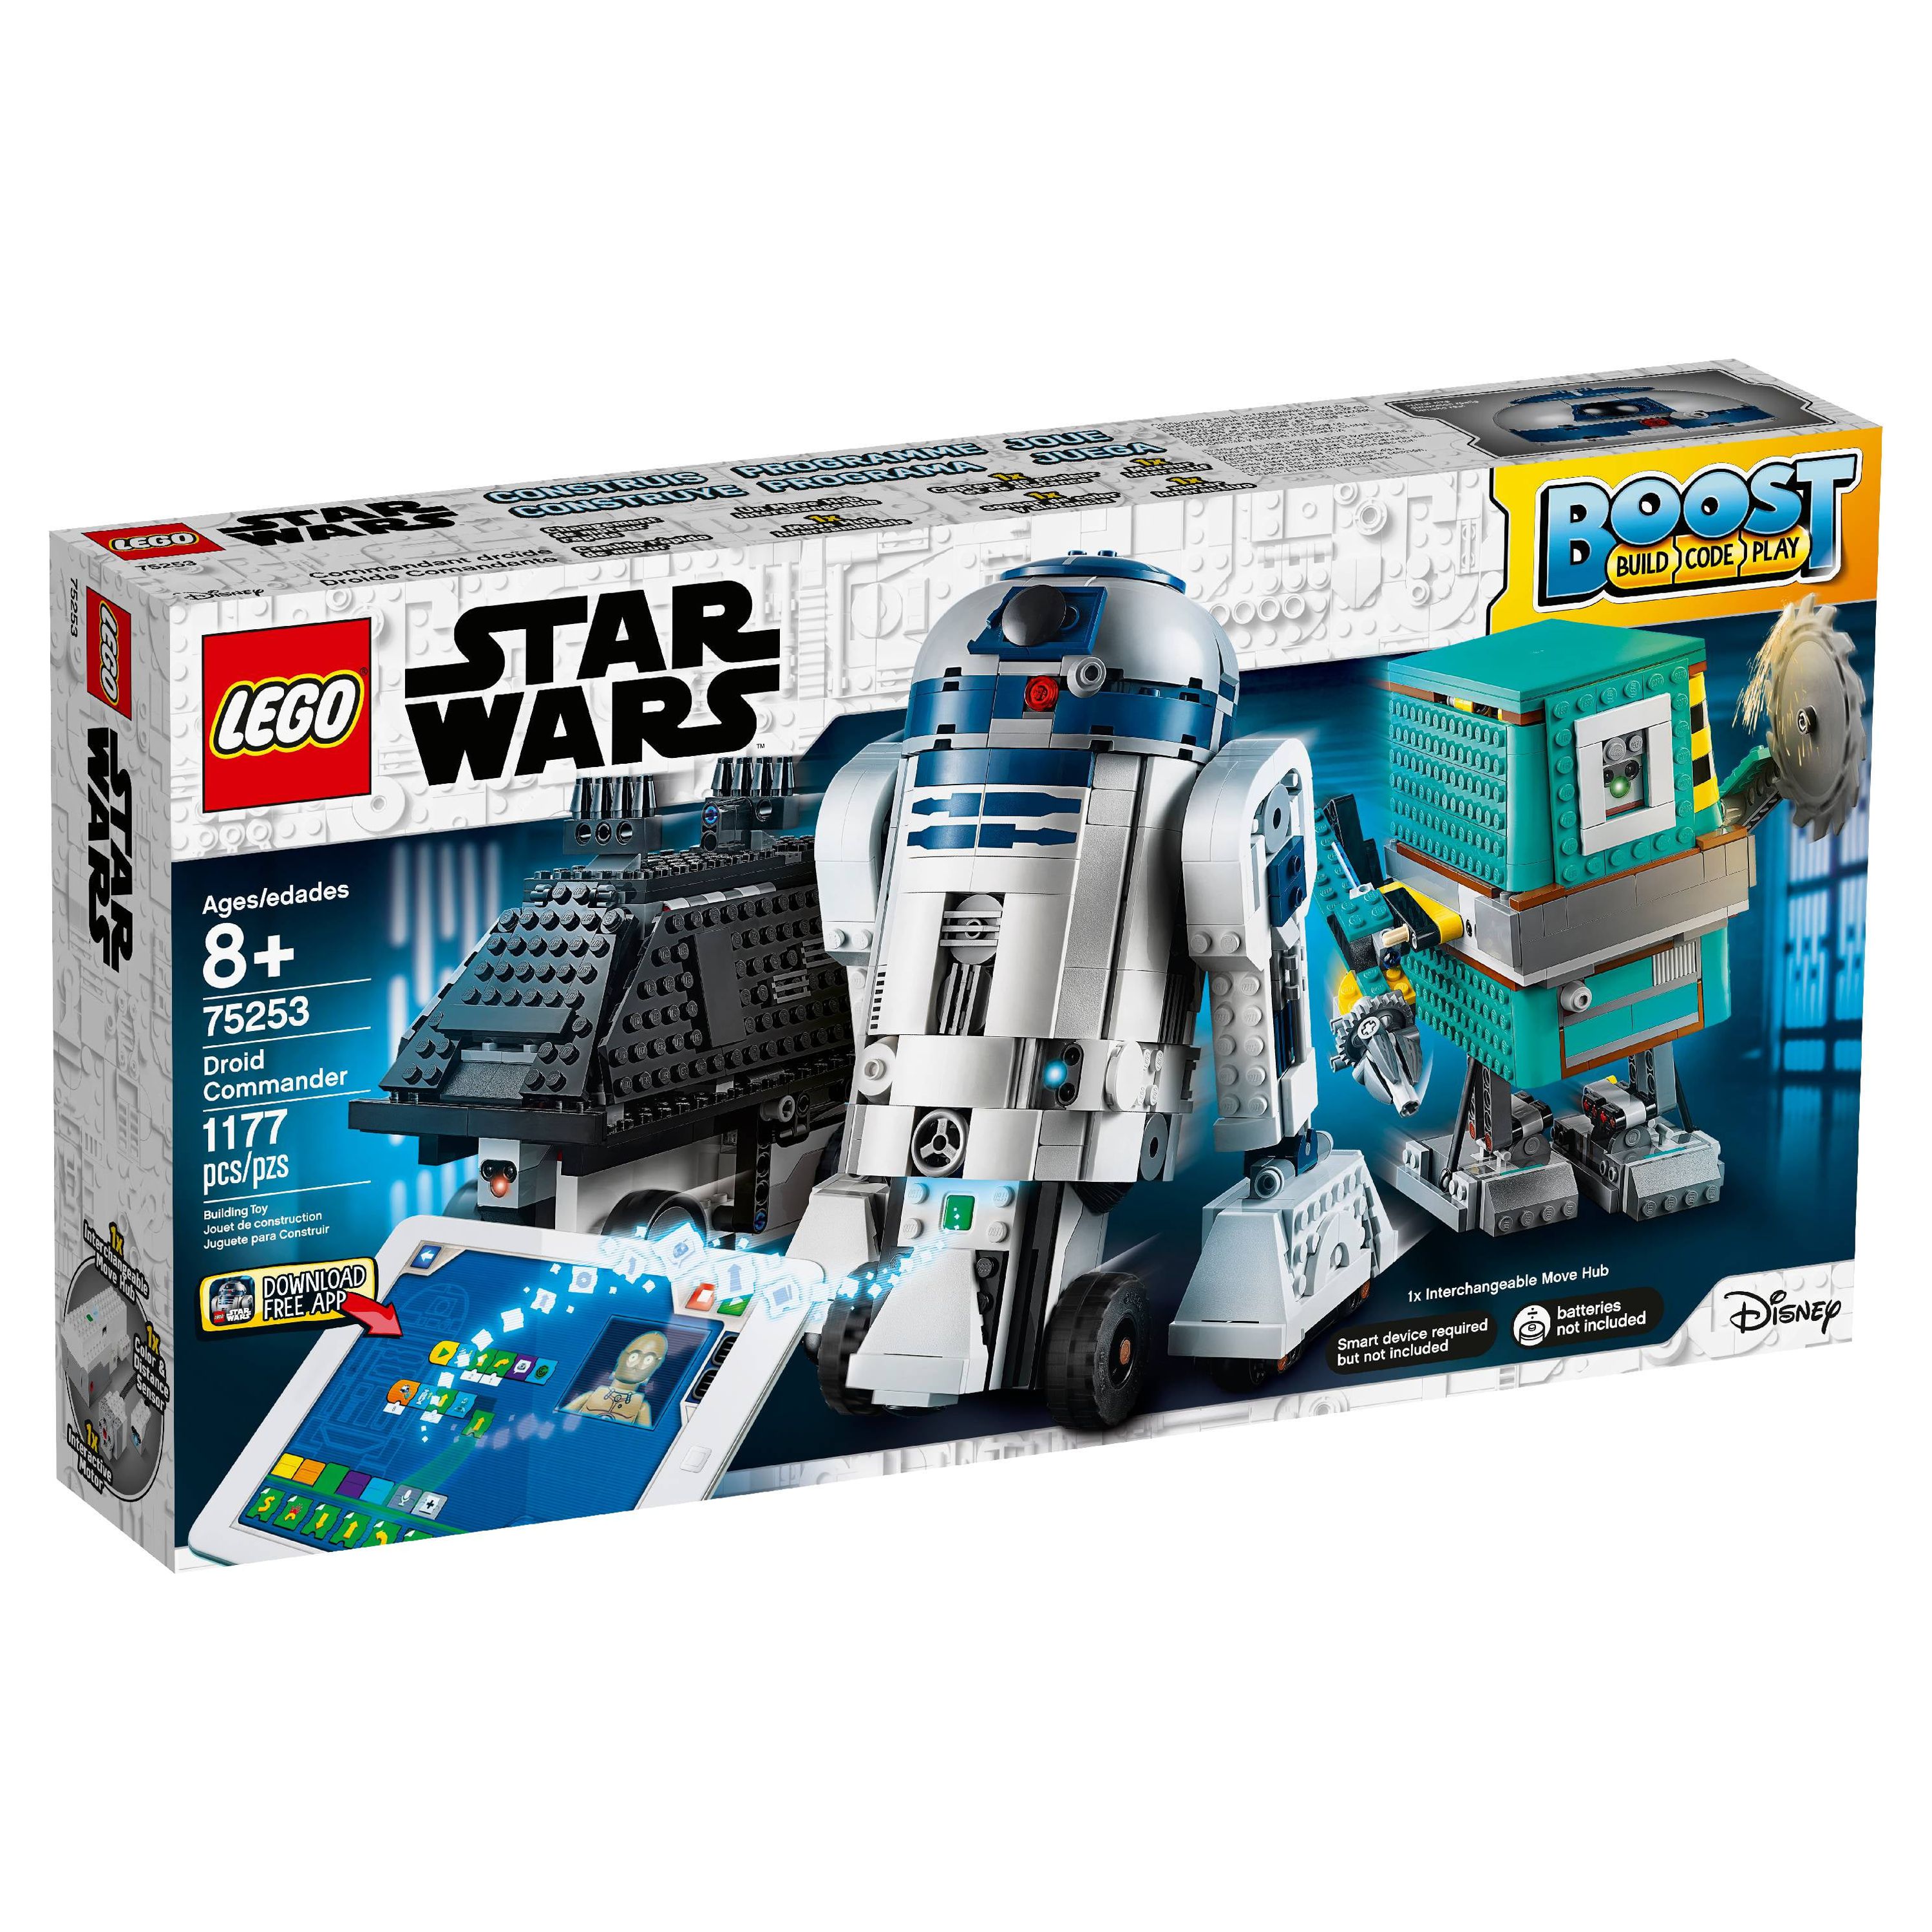 LEGO 75253 Star Wars Boost Droid Commander STEM Coding Educational Building Set for Kids - image 4 of 7